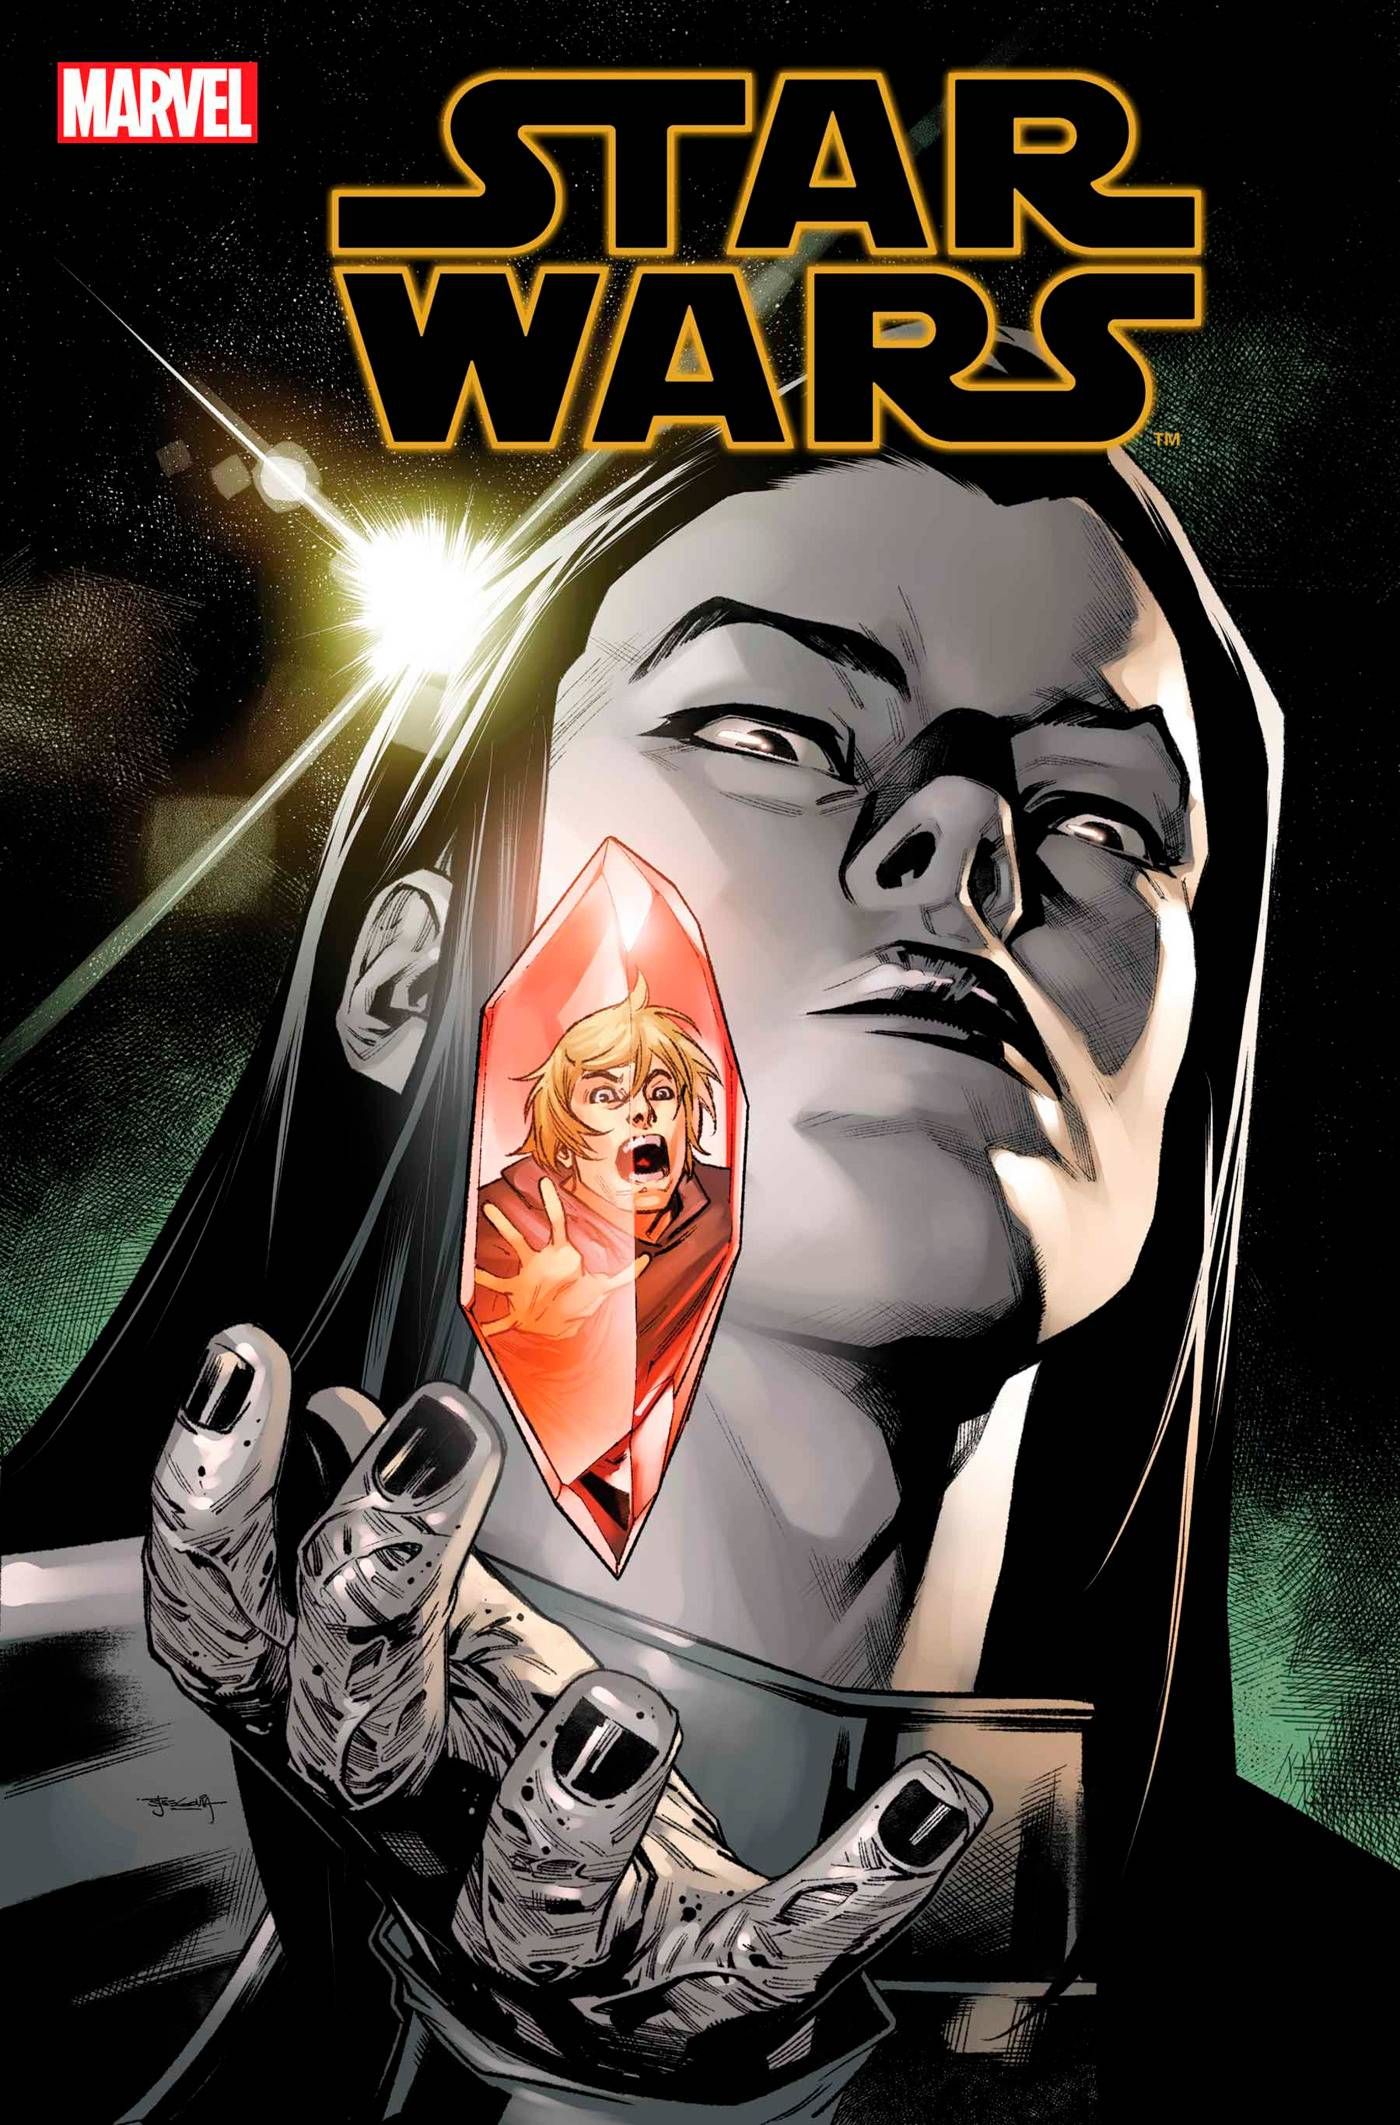 Star Wars #42 Comic